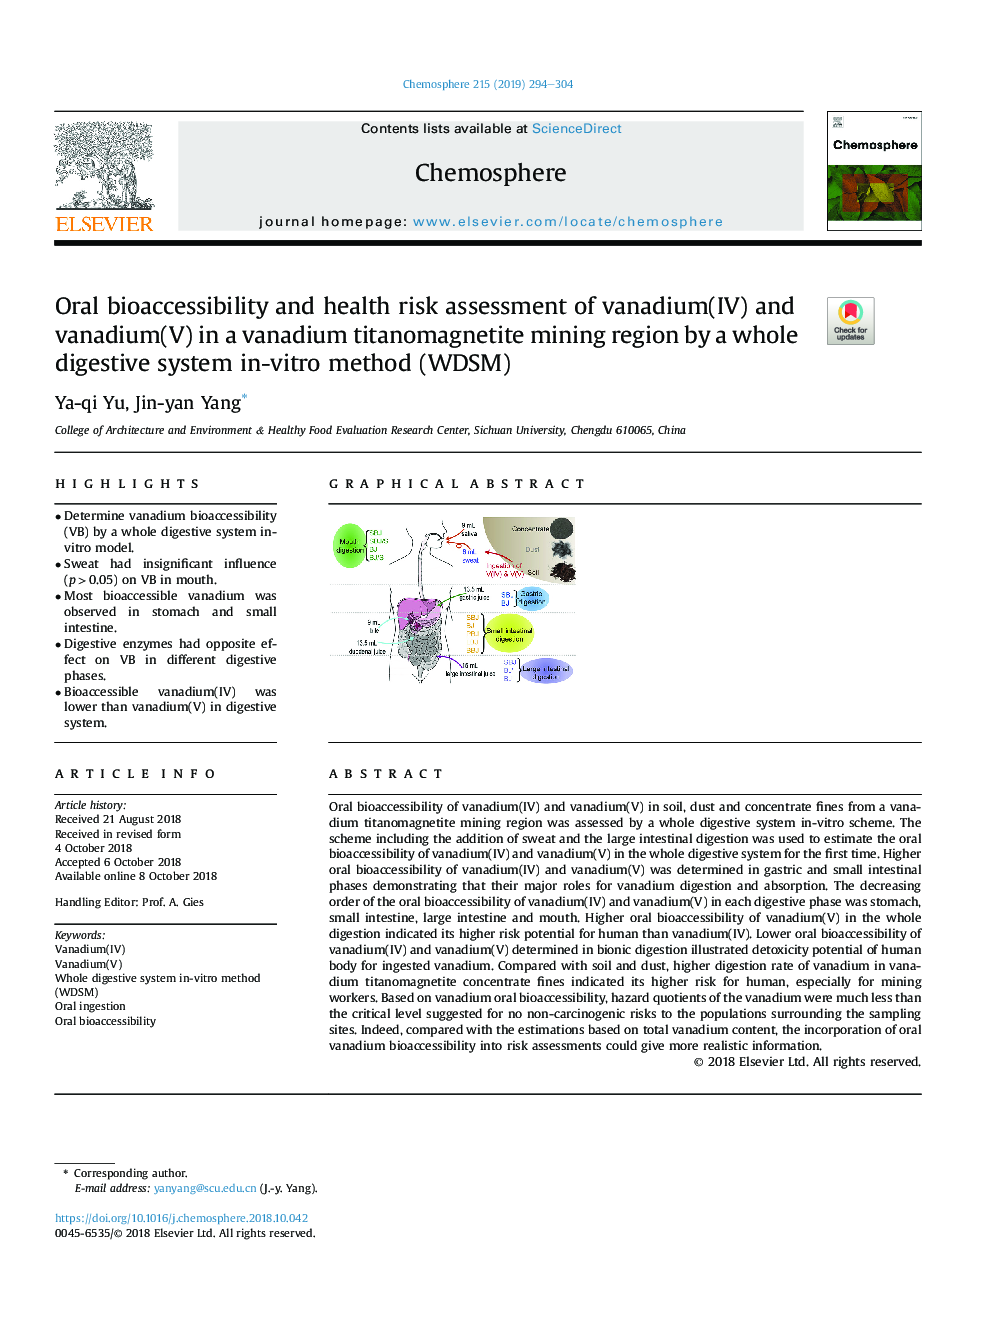 Oral bioaccessibility and health risk assessment of vanadium(IV) and vanadium(V) in a vanadium titanomagnetite mining region by a whole digestive system in-vitro method (WDSM)